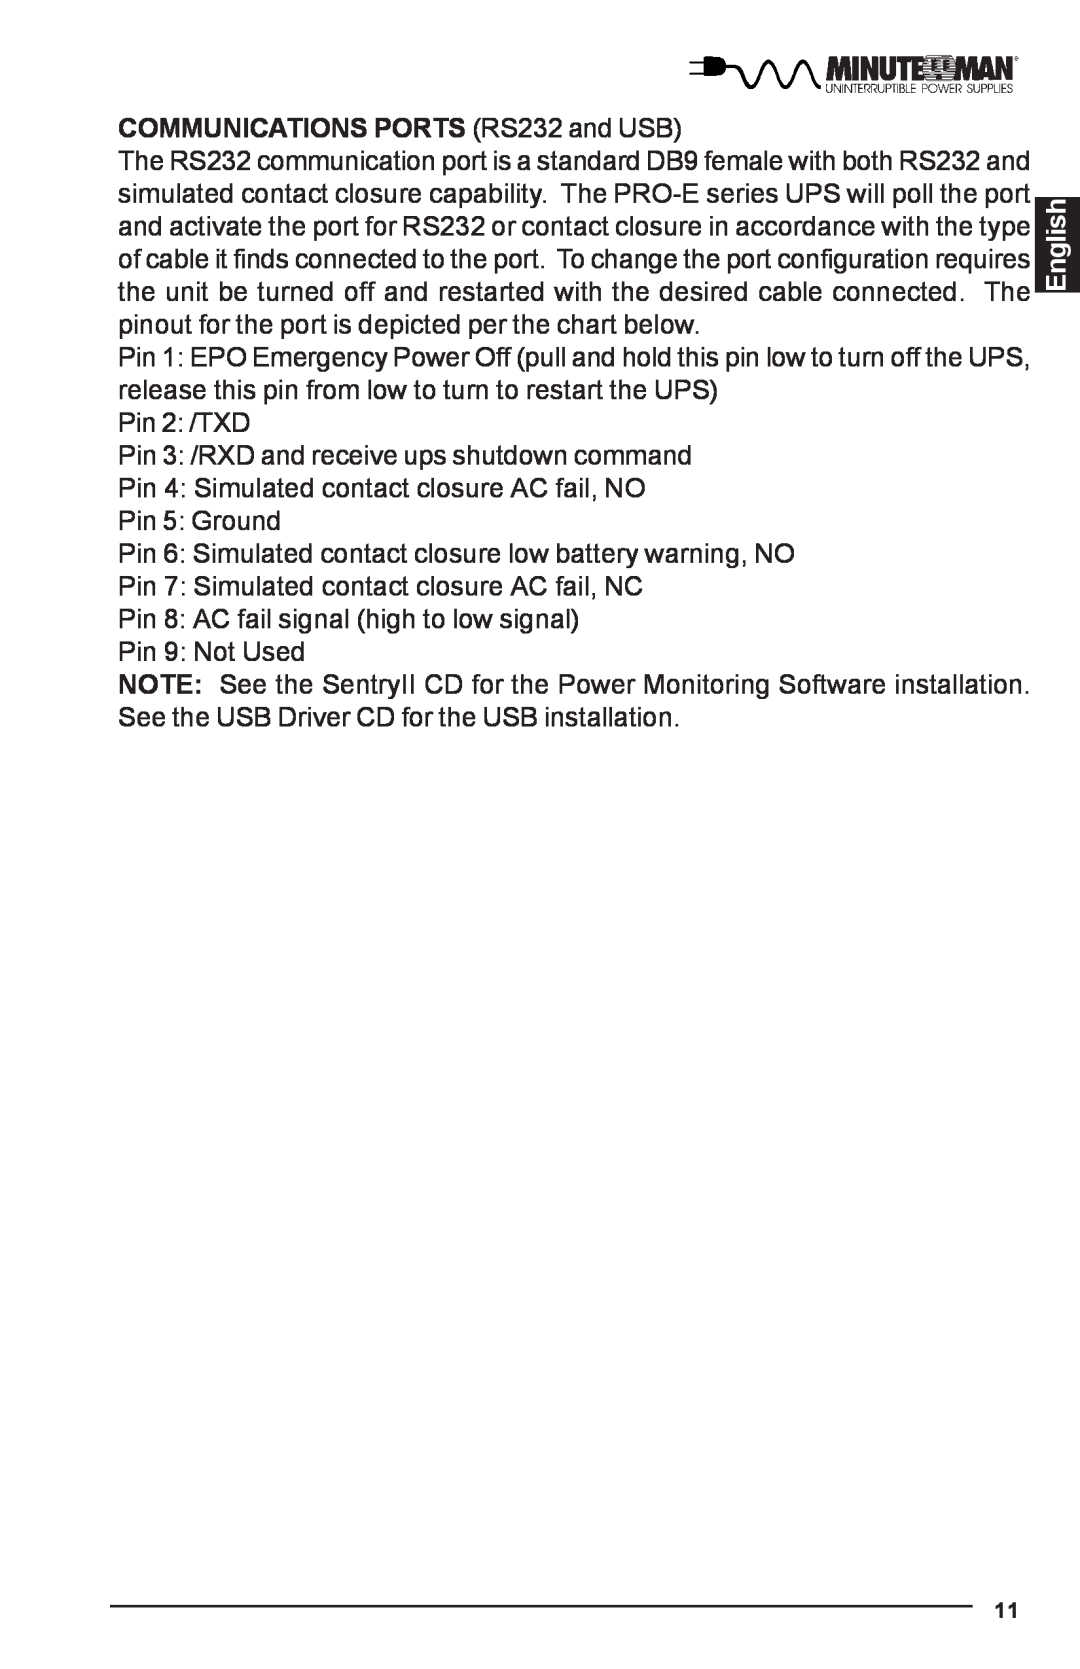 Minuteman UPS PRO-E user manual COMMUNICATIONS PORTS RS232 and USB, English 